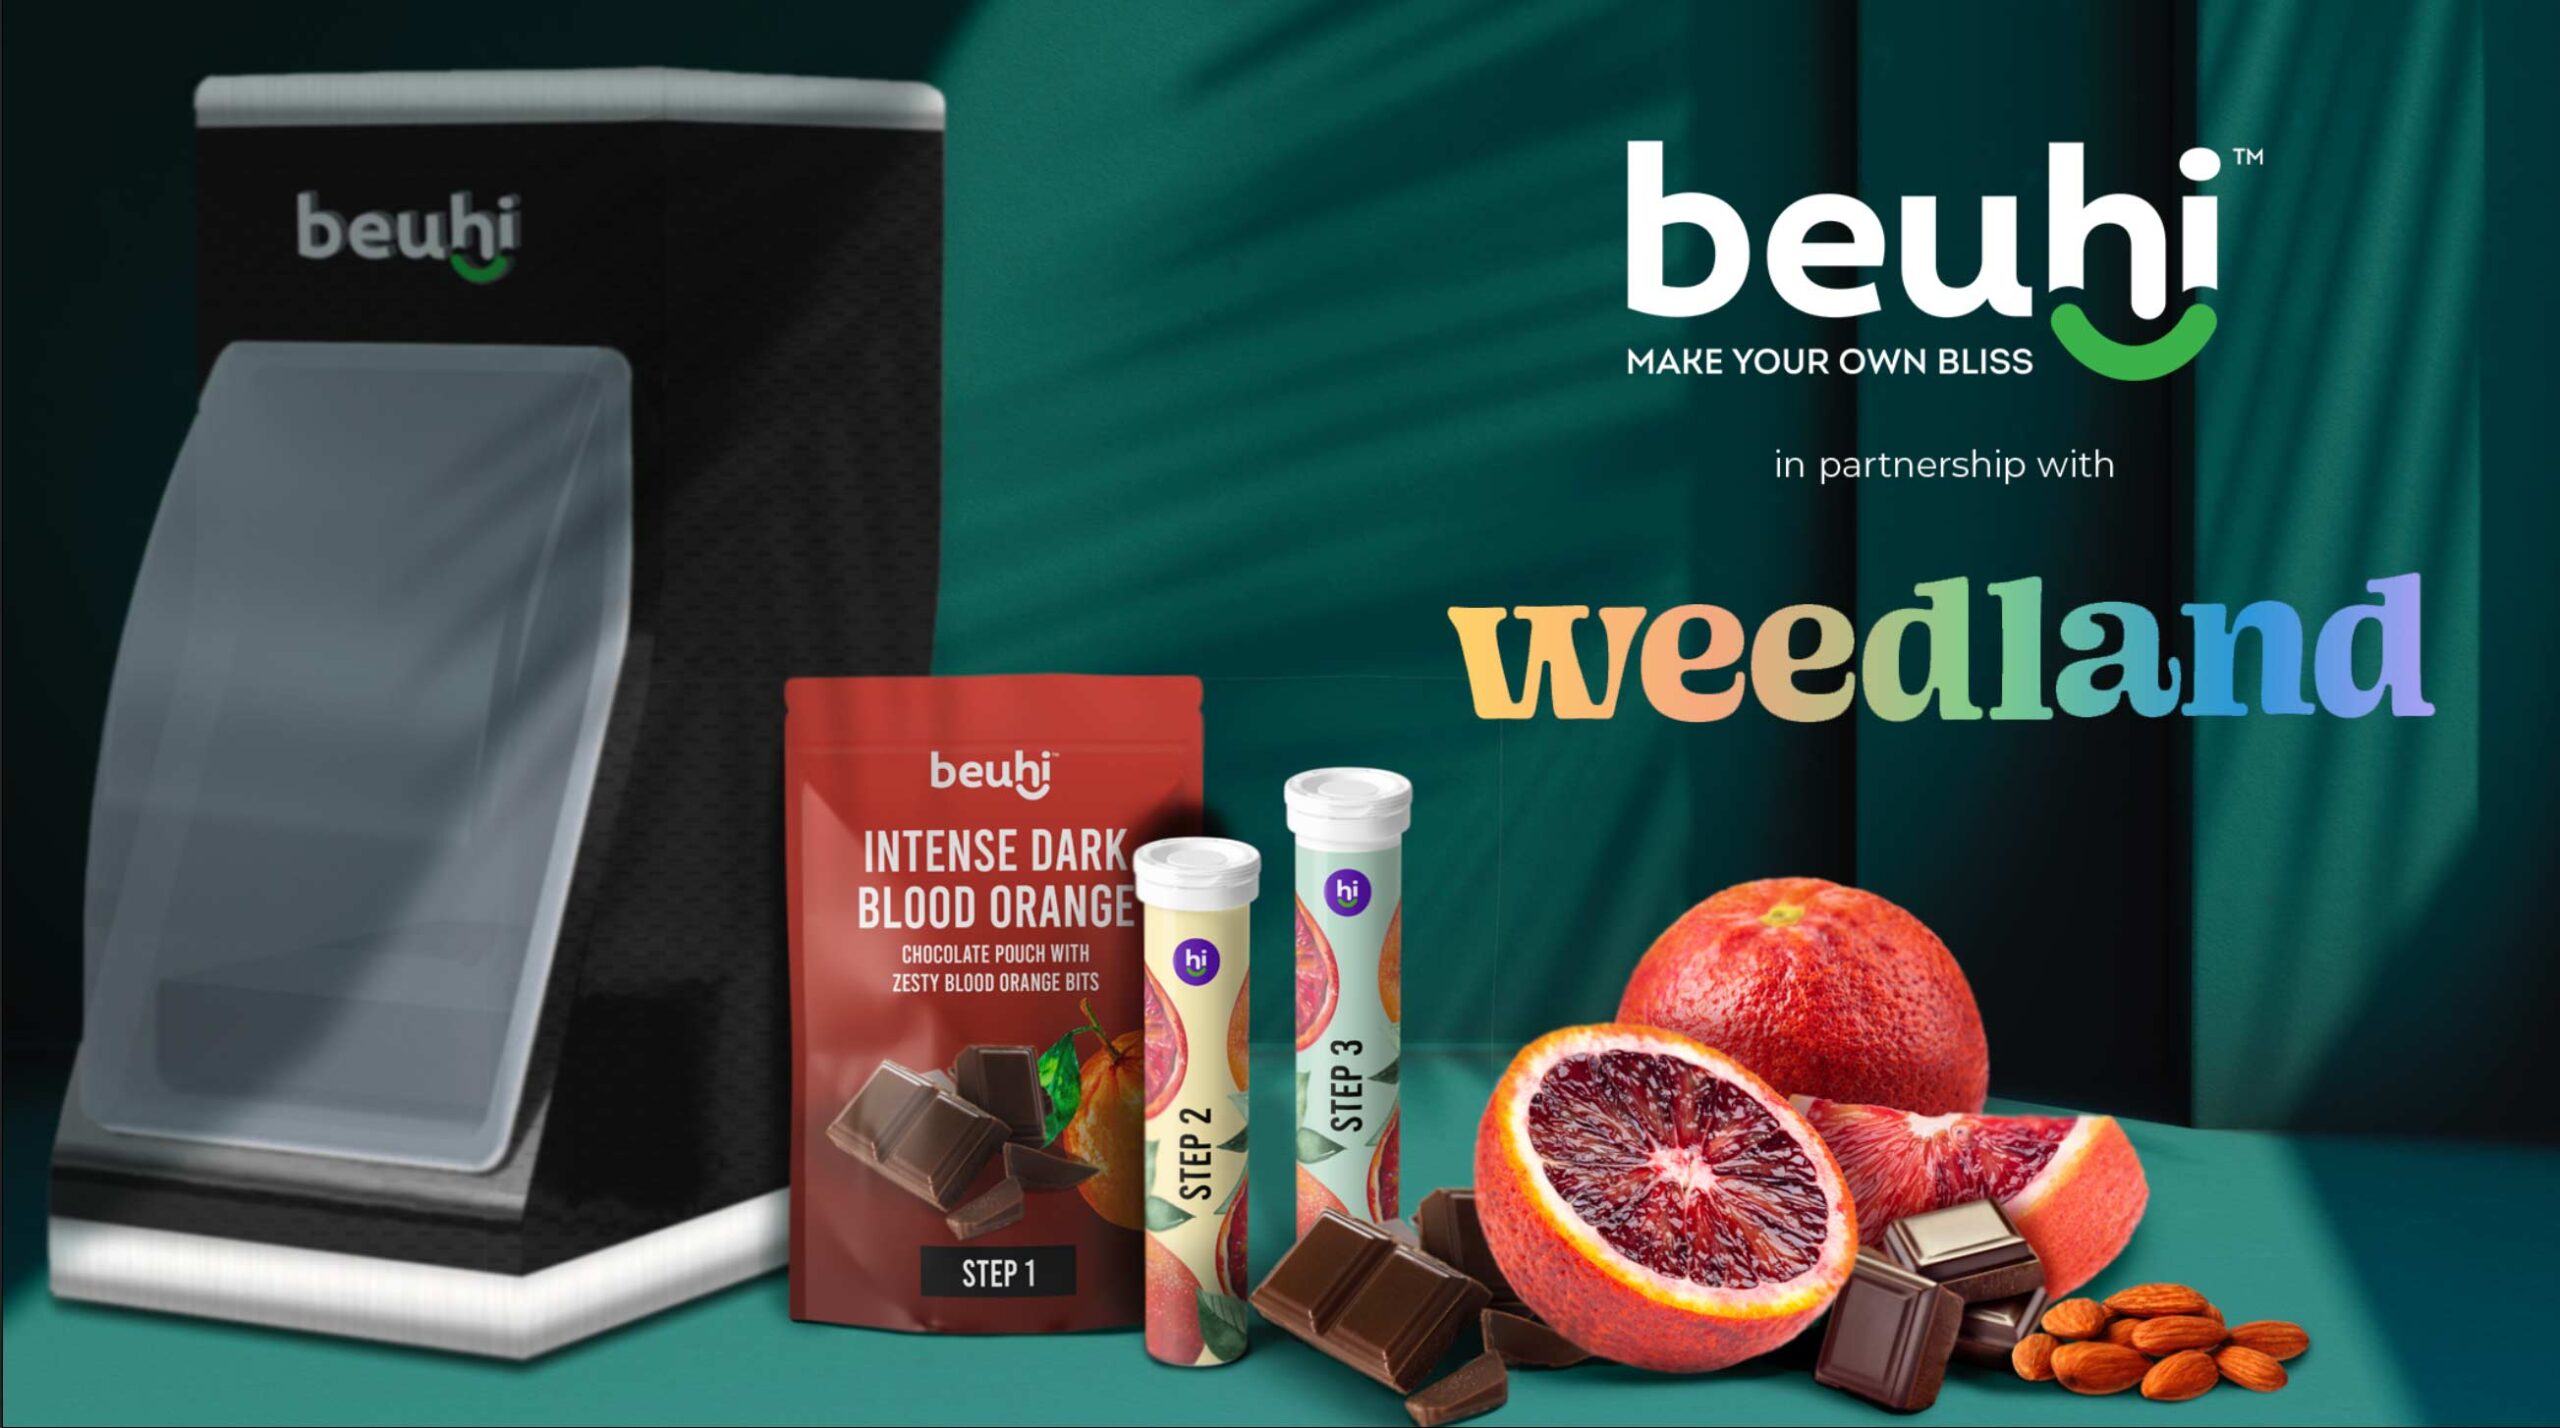 Beuhi™, Inc. enters into retail partnership with Weedland.com